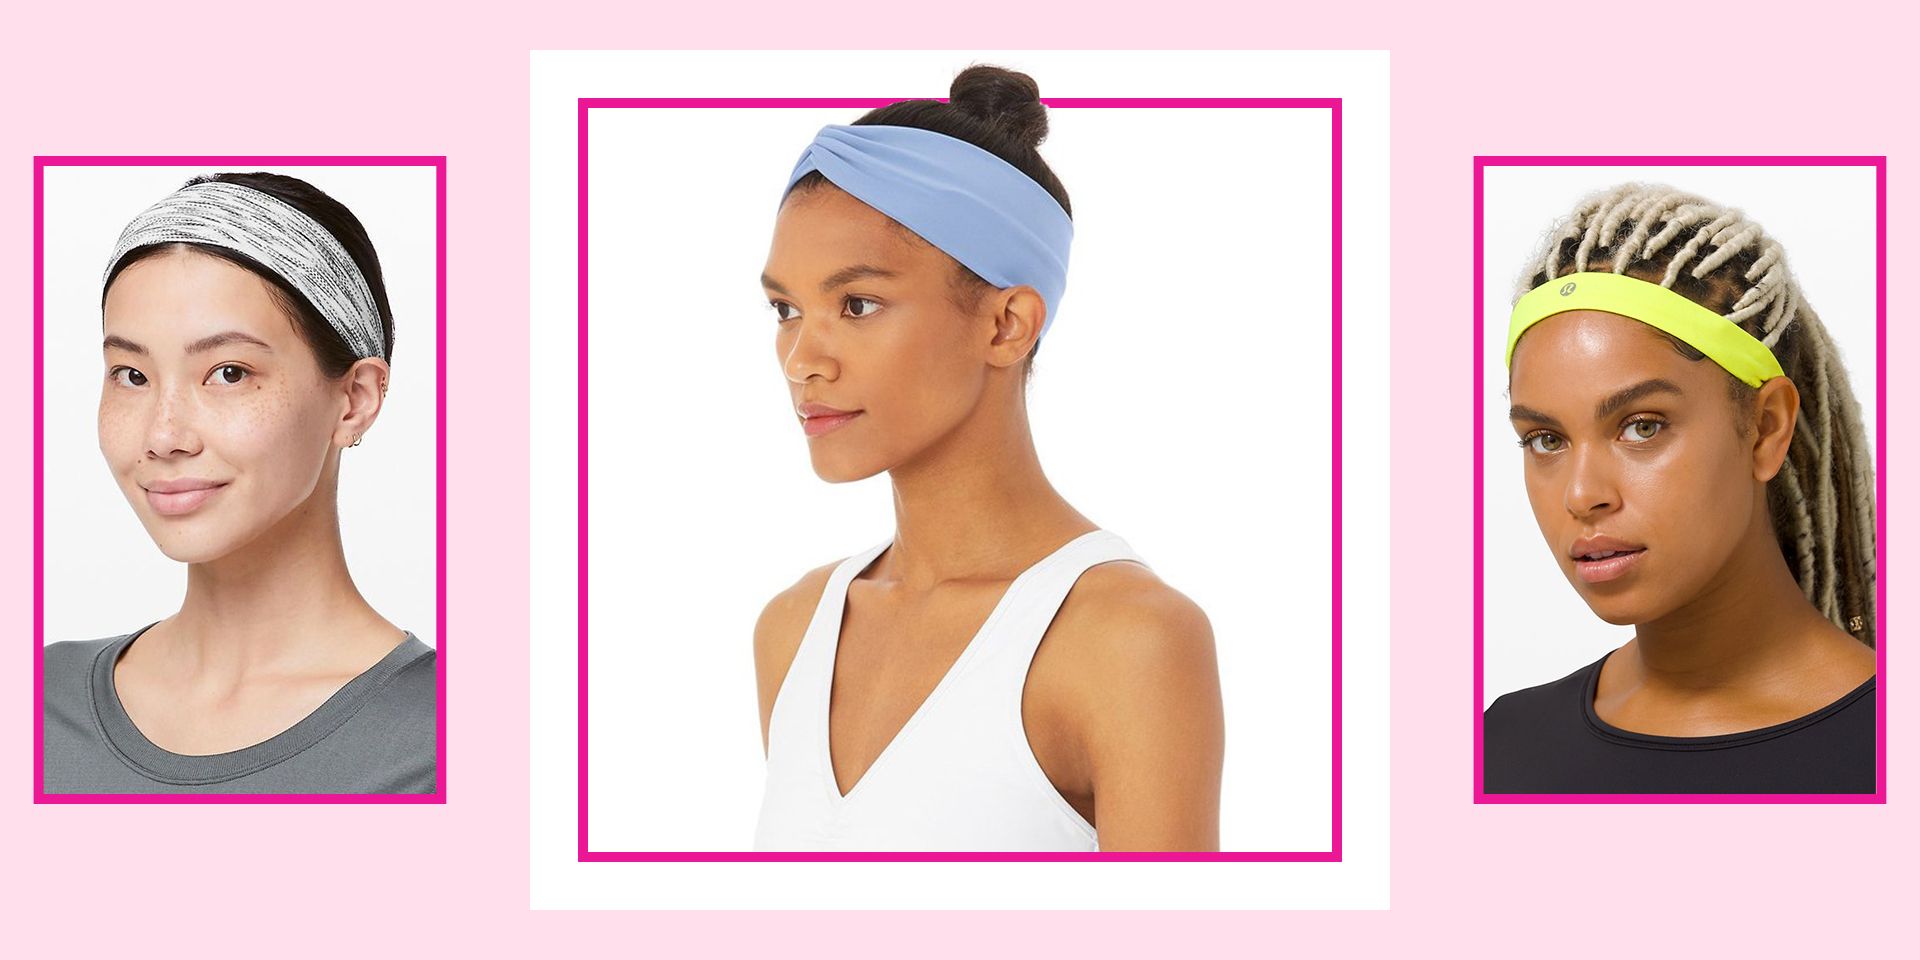 women's fitness headbands